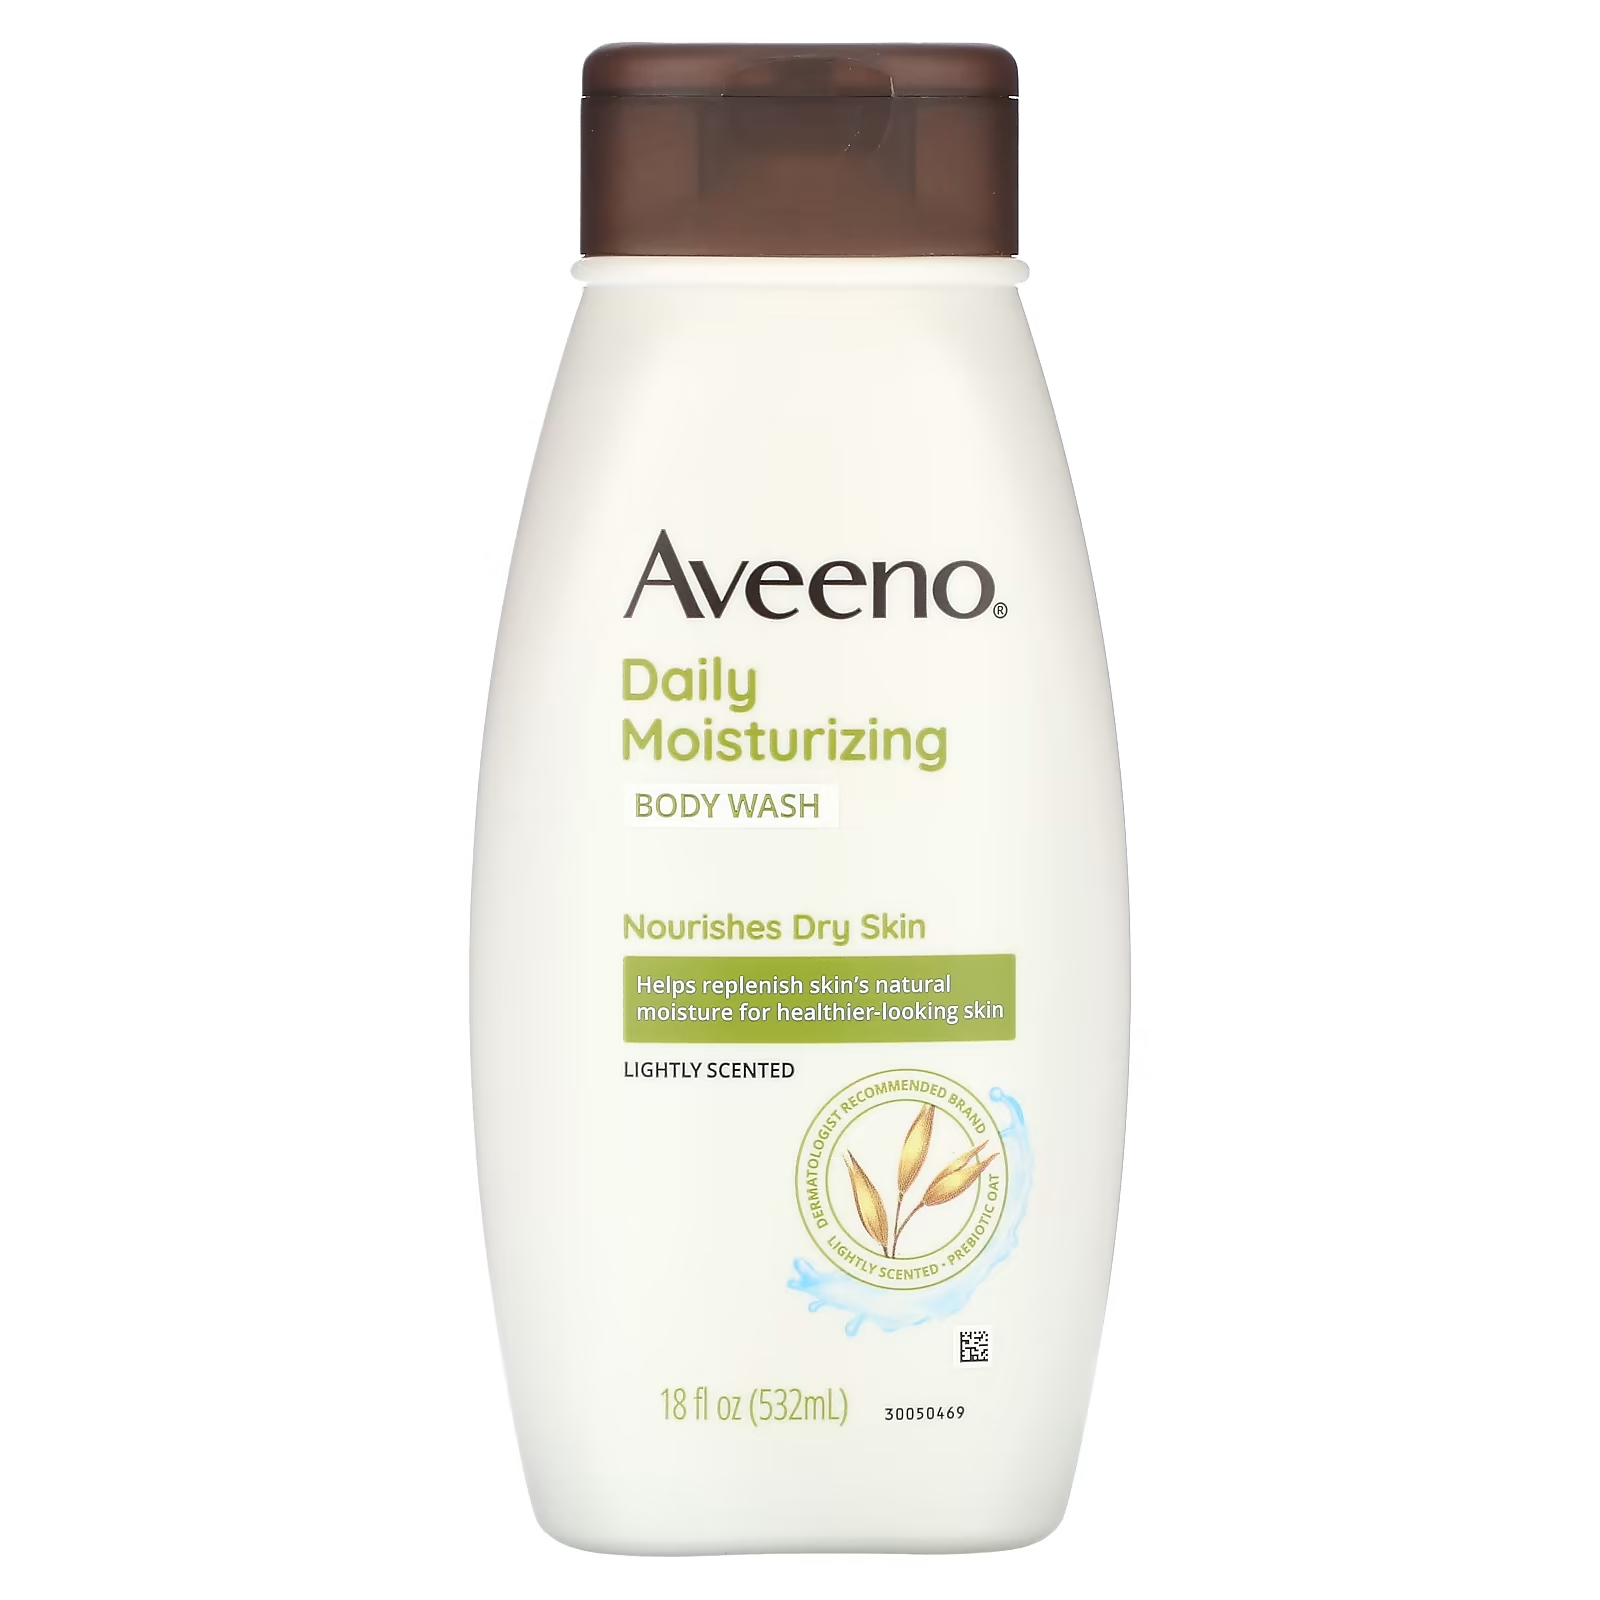 Aveeno Daily Увлажняющий гель для душа с легким ароматом, 18 жидких унций (532 мл) цена и фото